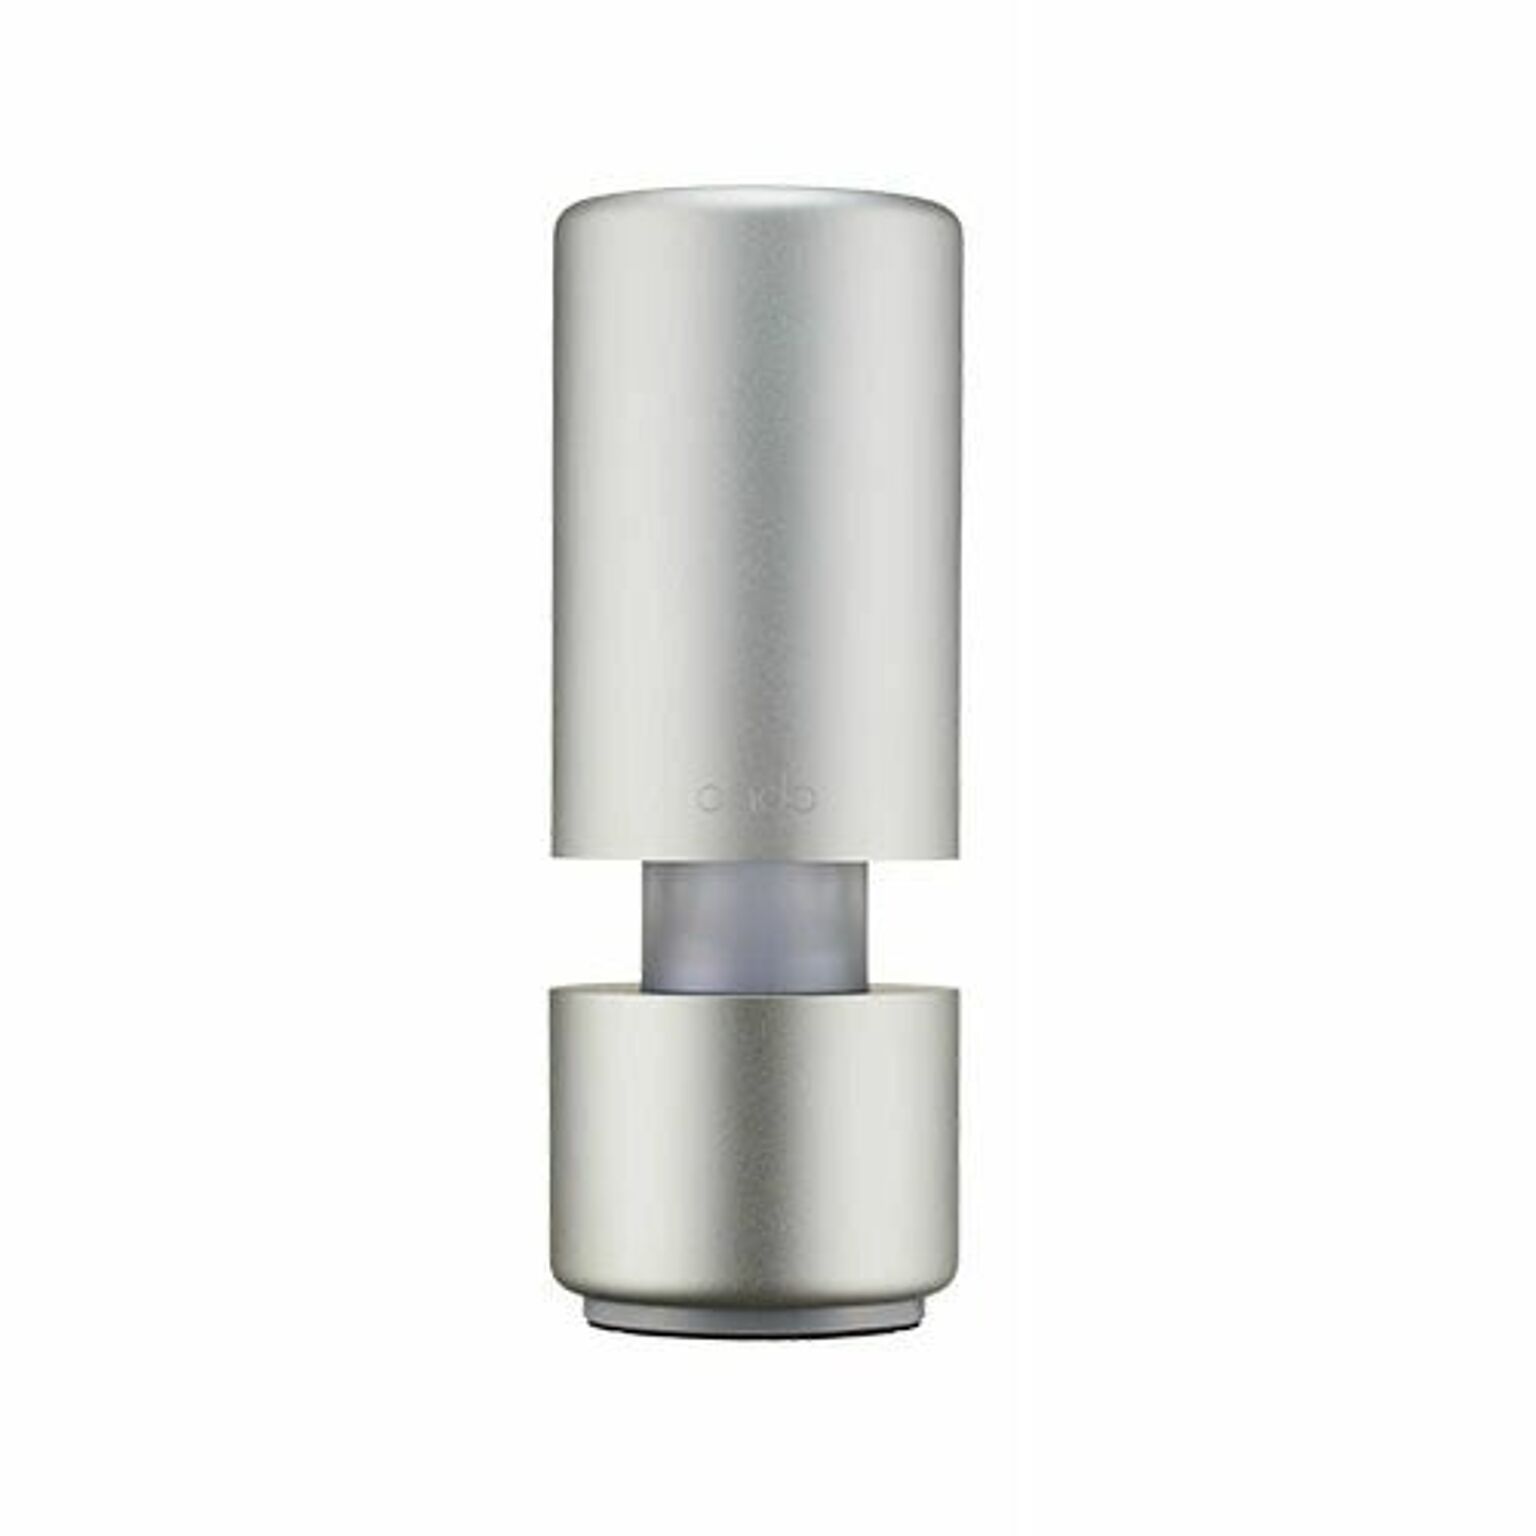 Air Purifier LEAF-Portable MP-C30 ポータブル空気清浄機/車載・小スペースタイプ/モバイル/USB電源/LEDの写真